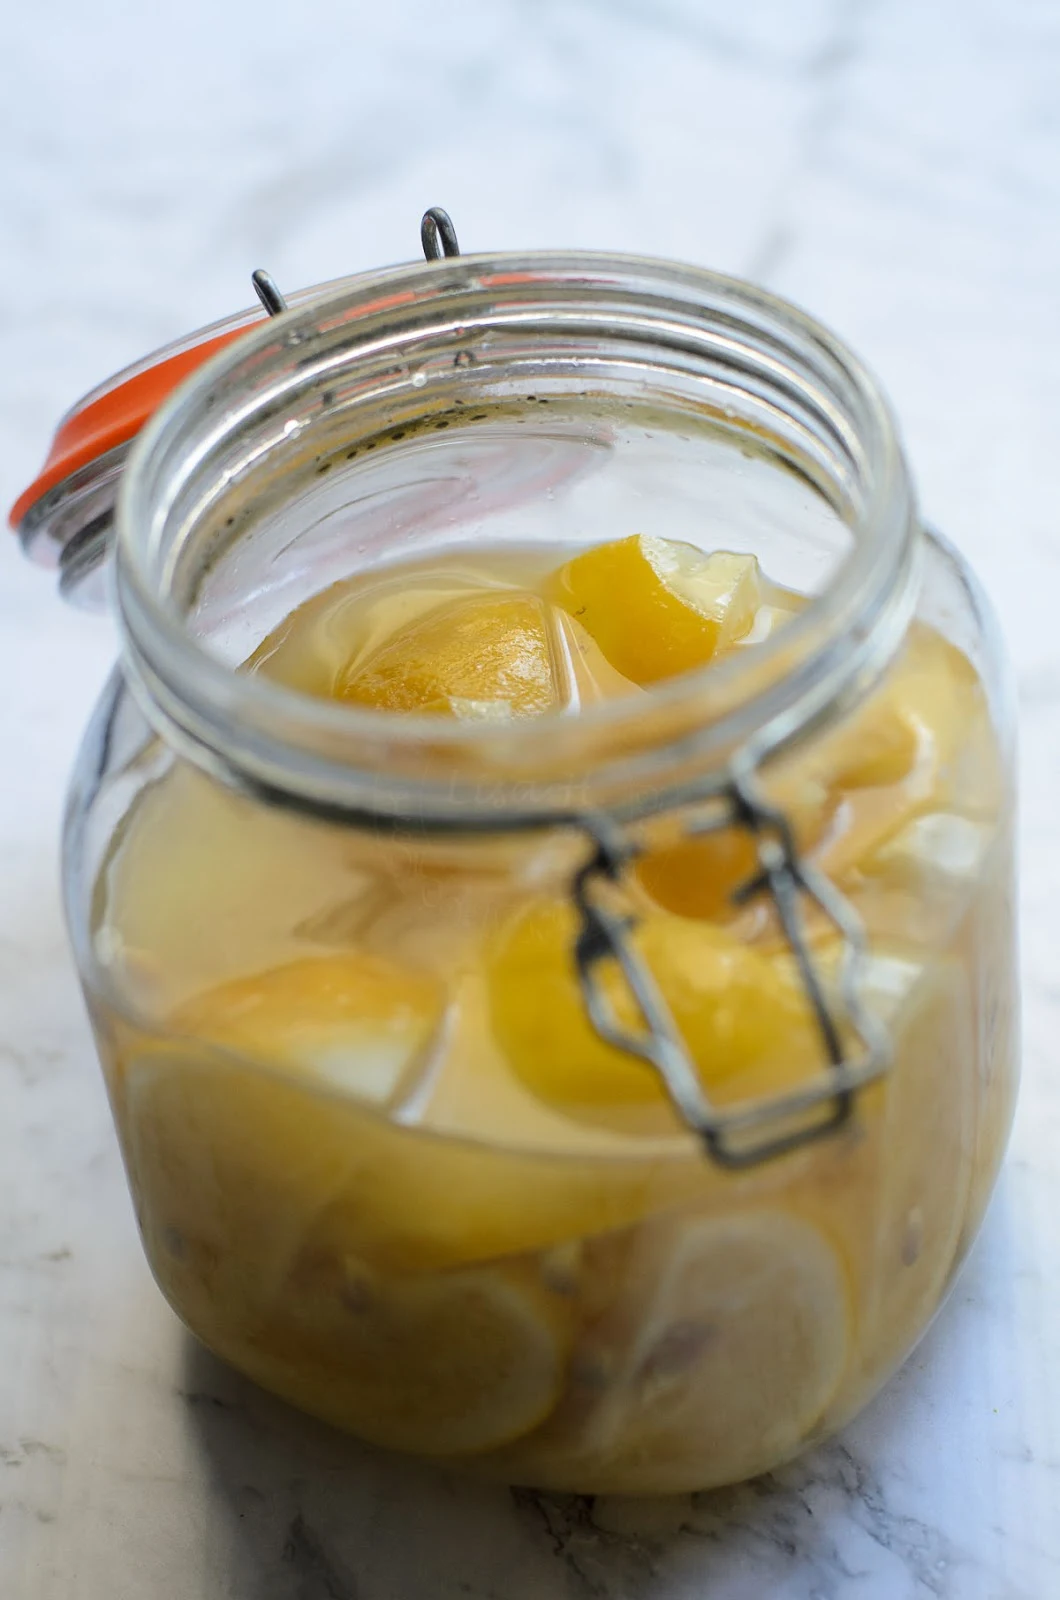 Preserved lemon in a jar photo